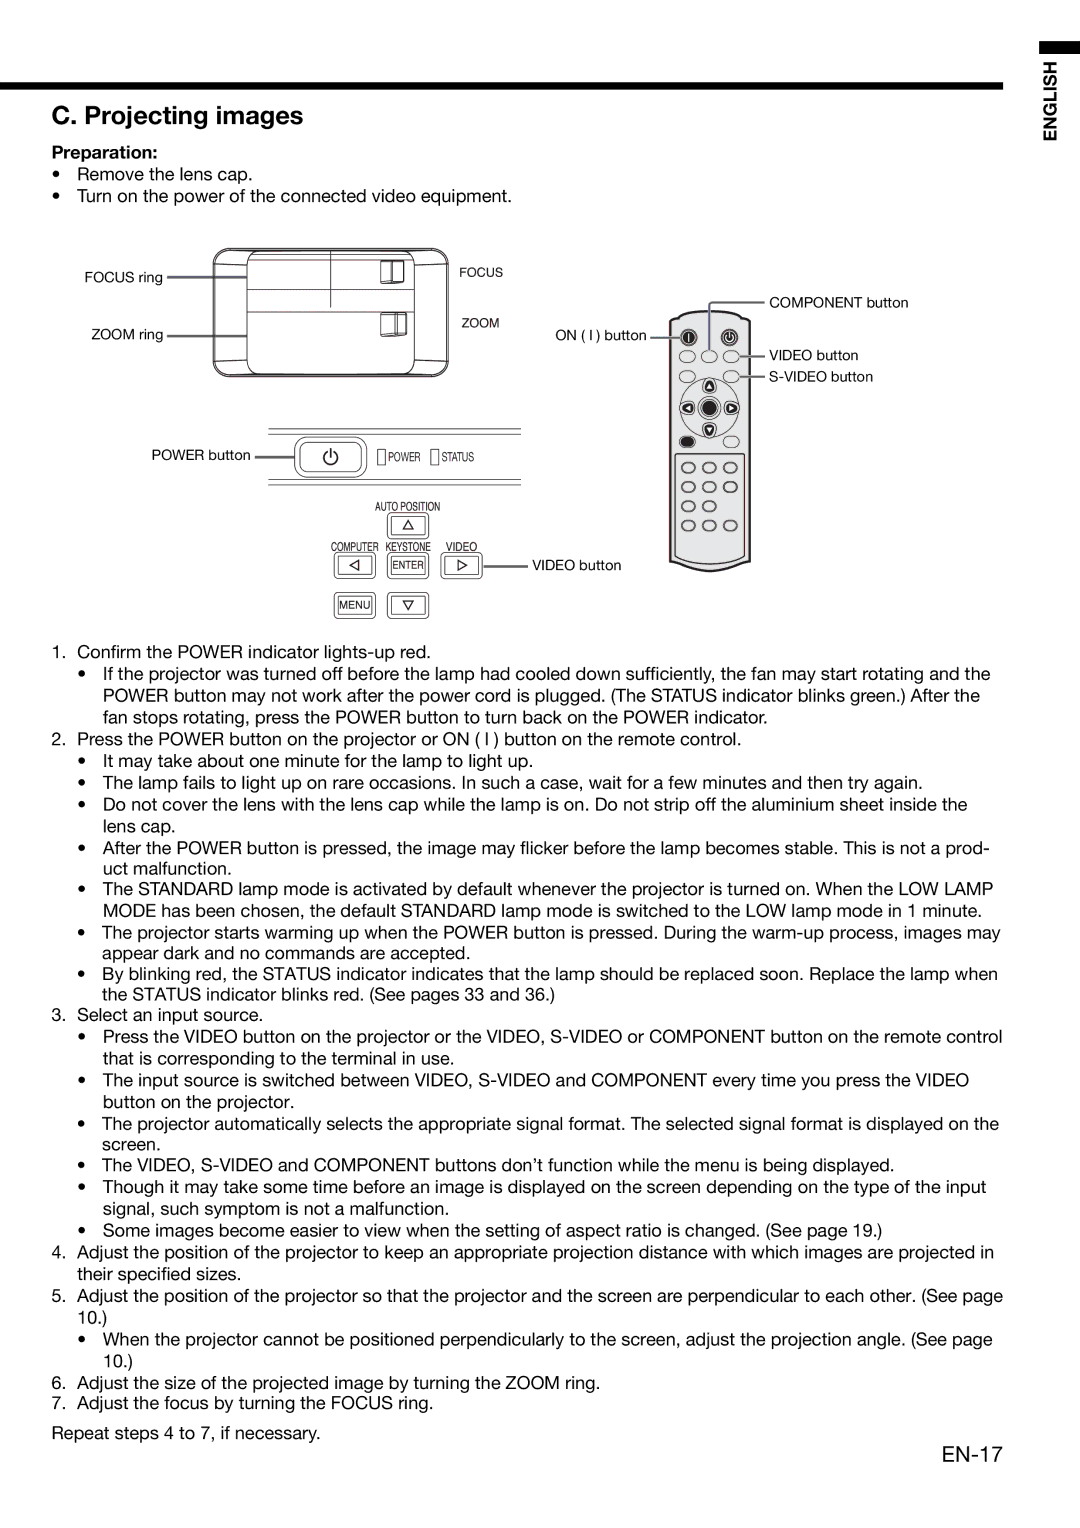 Mitsubishi Electronics HD1000 user manual Projecting images, Preparation 